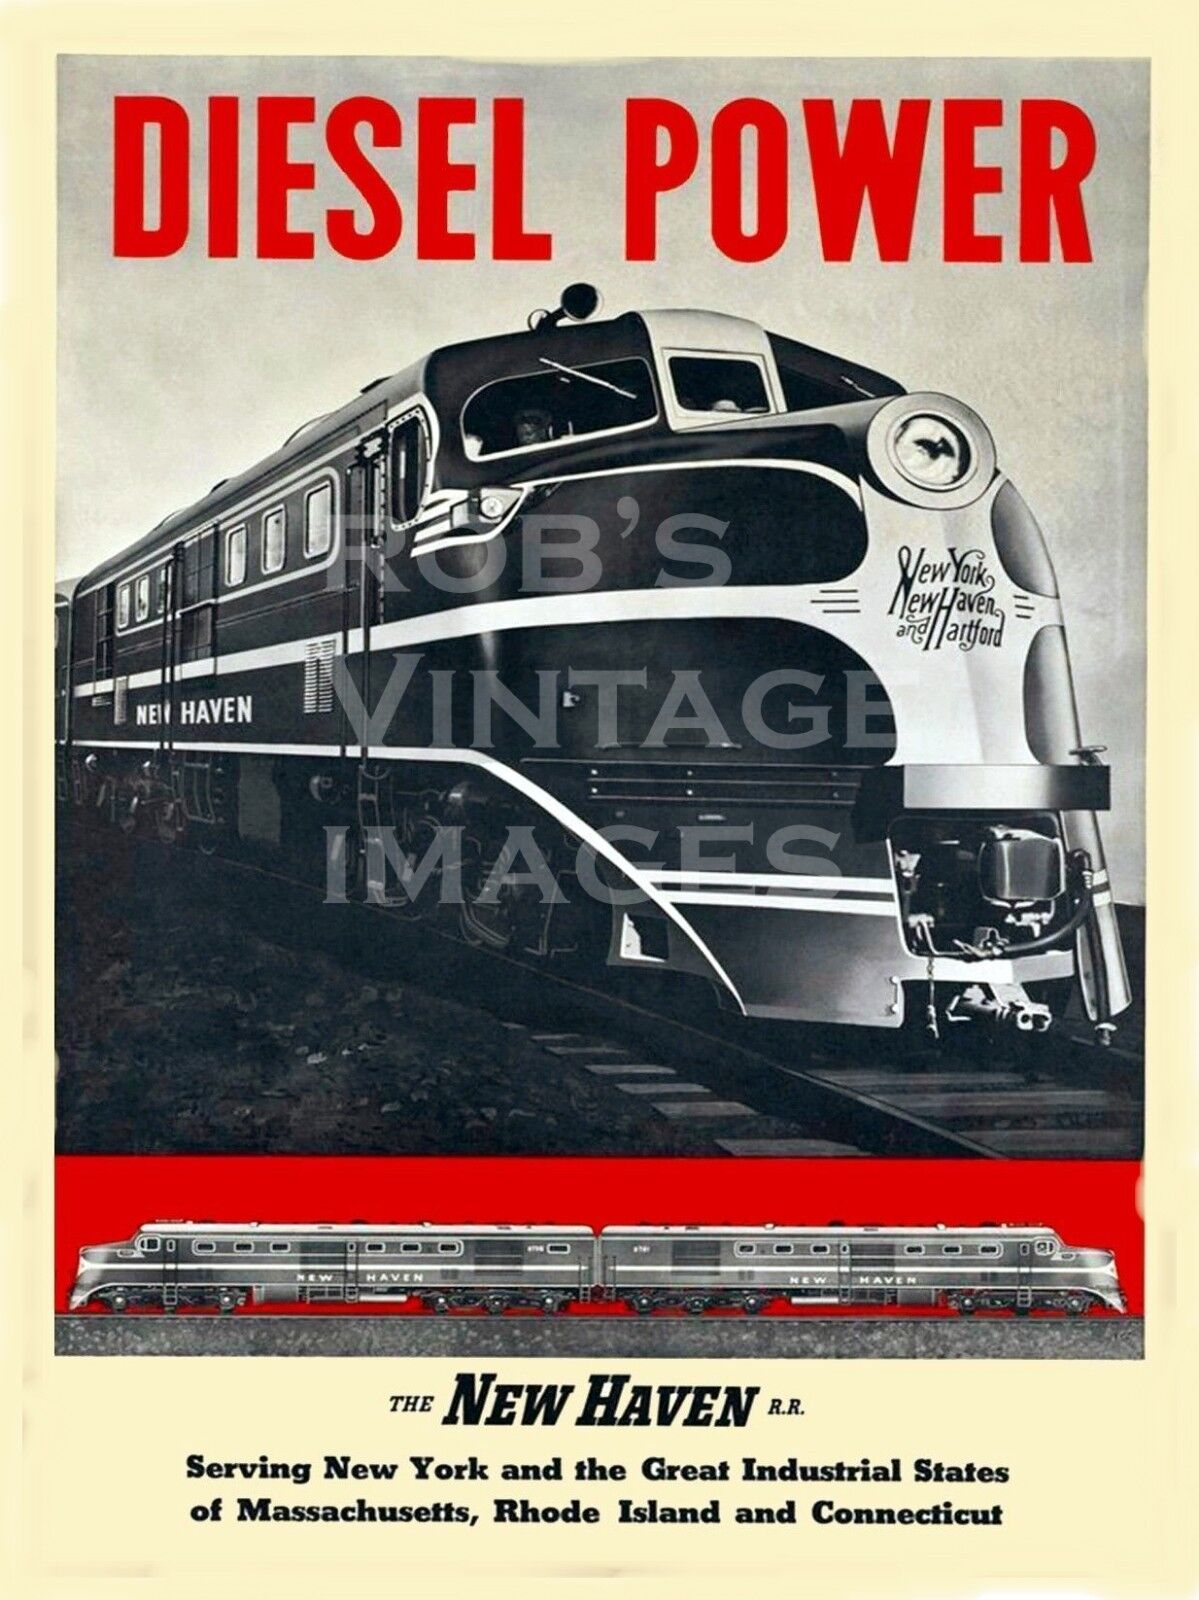 New York Hartford New Haven Railroad Photo Poster train DL-109 Locomotive Diesel